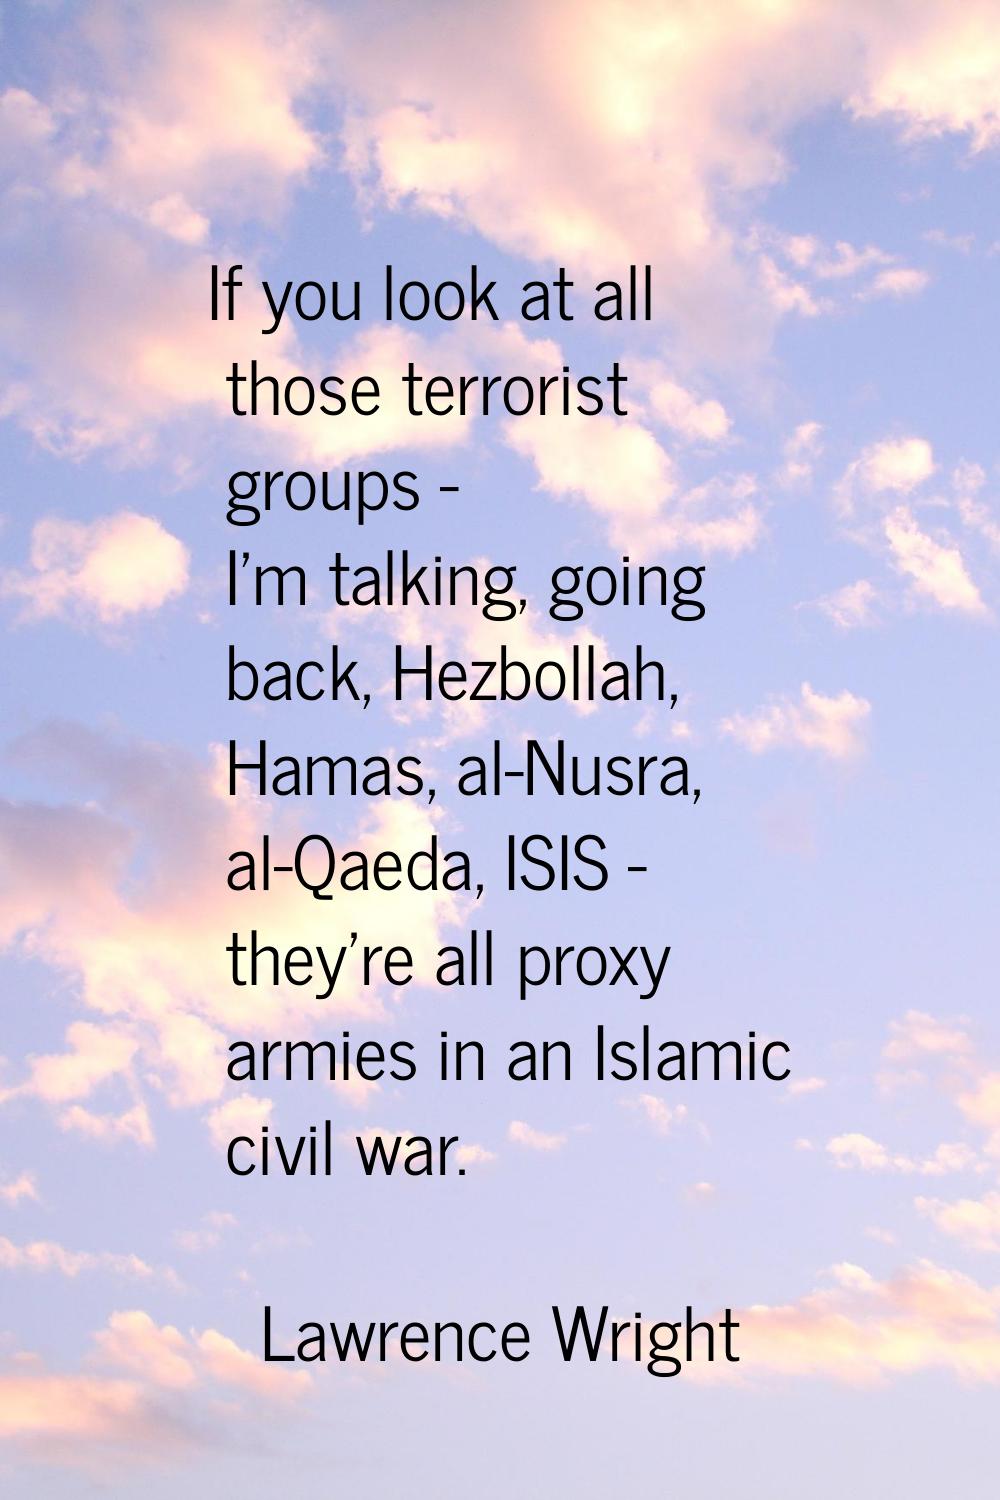 If you look at all those terrorist groups - I'm talking, going back, Hezbollah, Hamas, al-Nusra, al